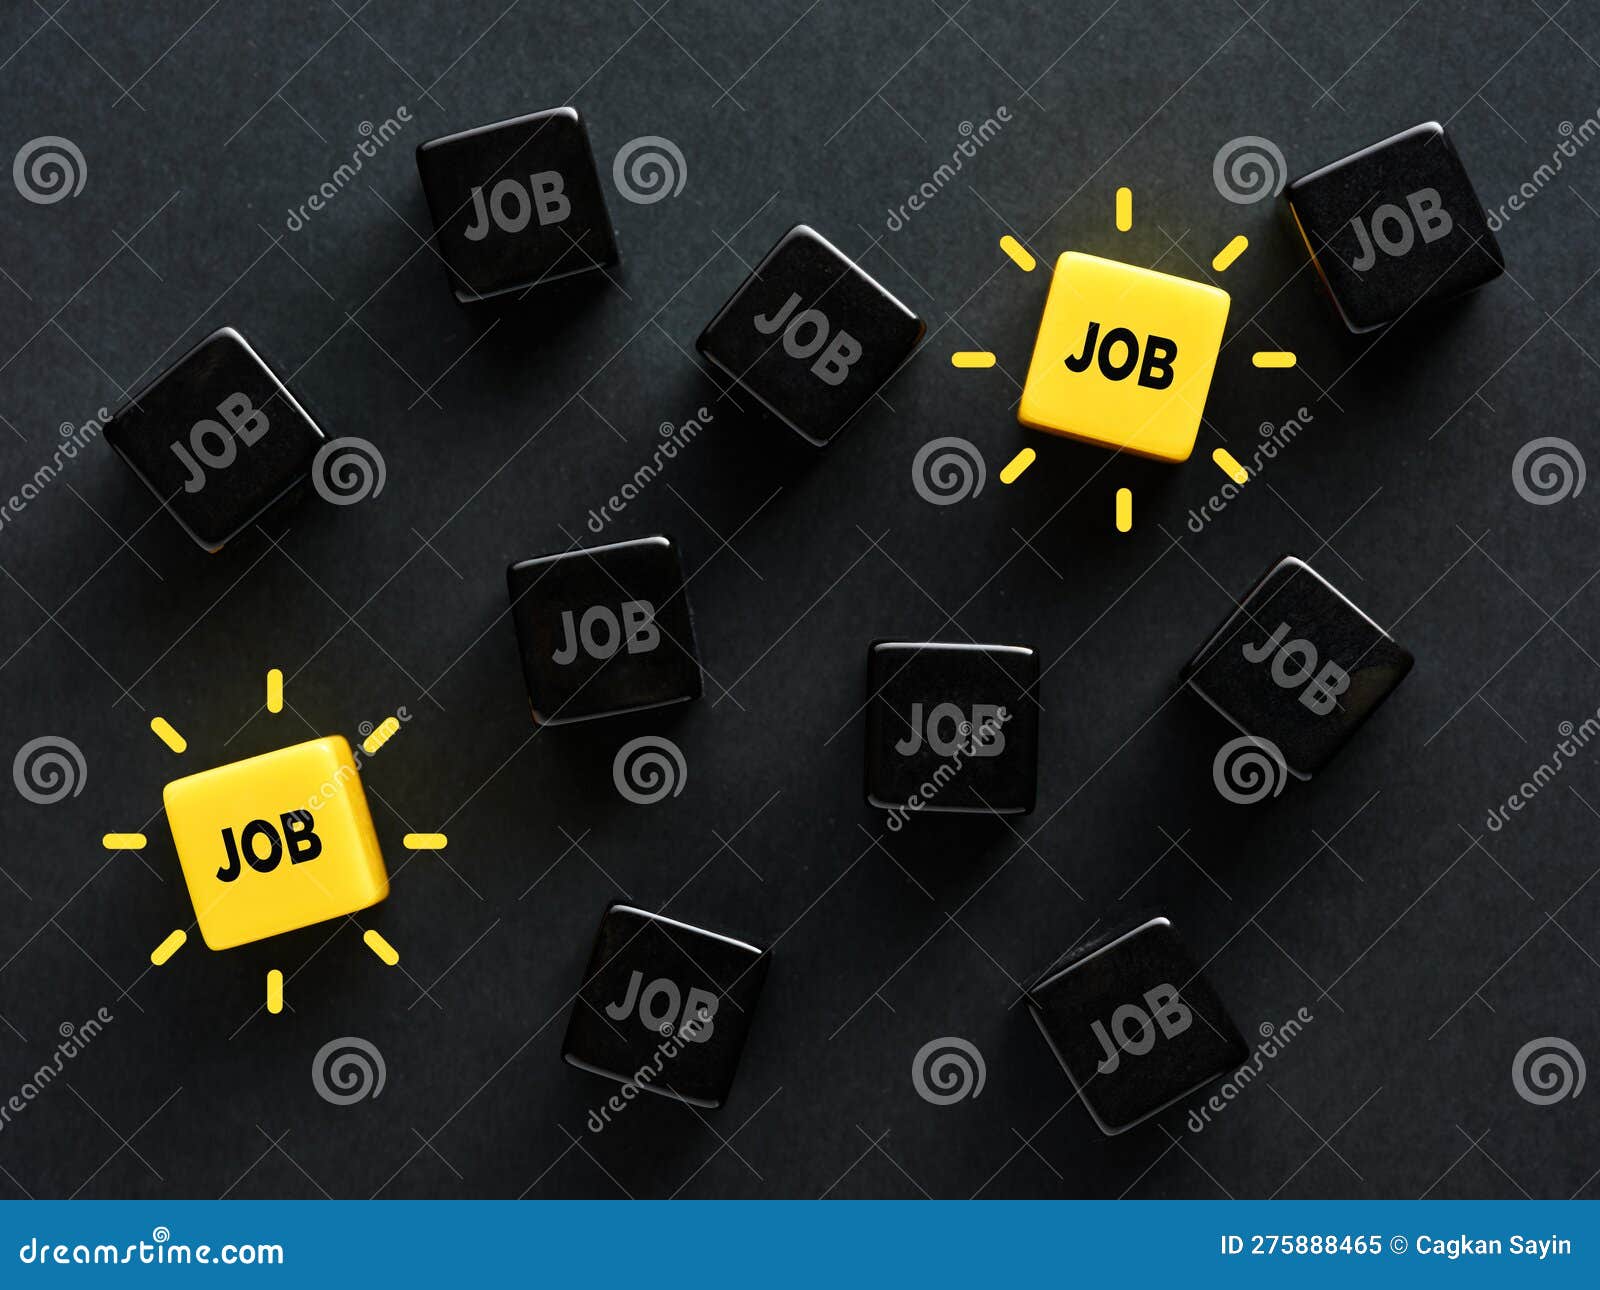 Talent Acquisition Lead - Global E-Commerce - San Jose Job TikTok San Jose, CA